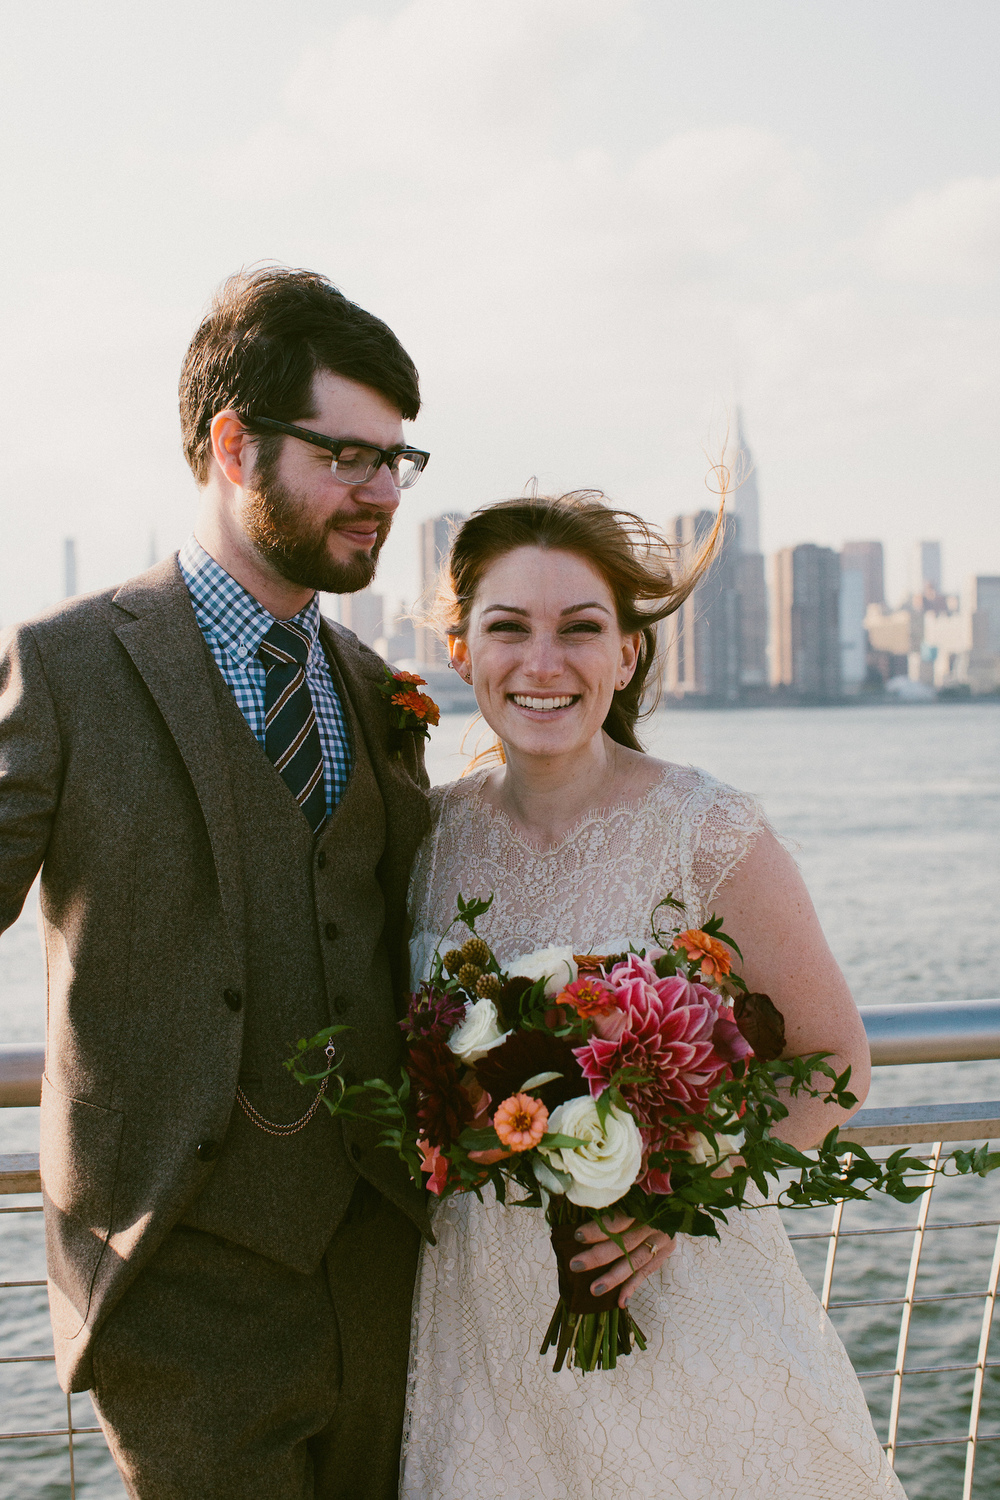 Full Aperture Floral & Corey Torpie Photography  - Brooklyn Wedding - 59.jpeg